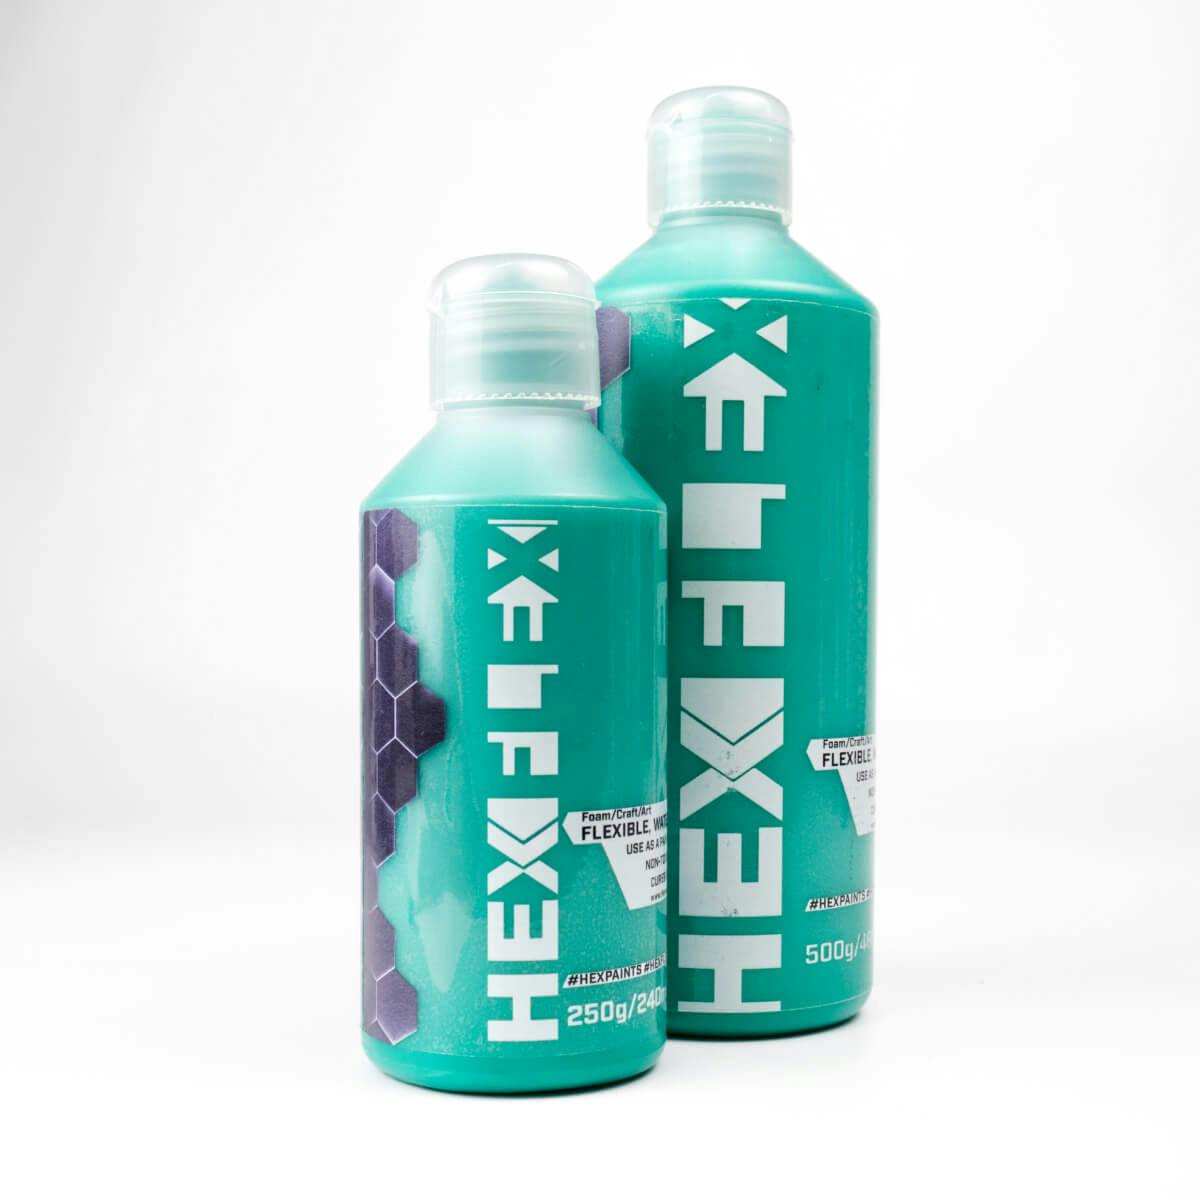 Product HexFlex Primer in green